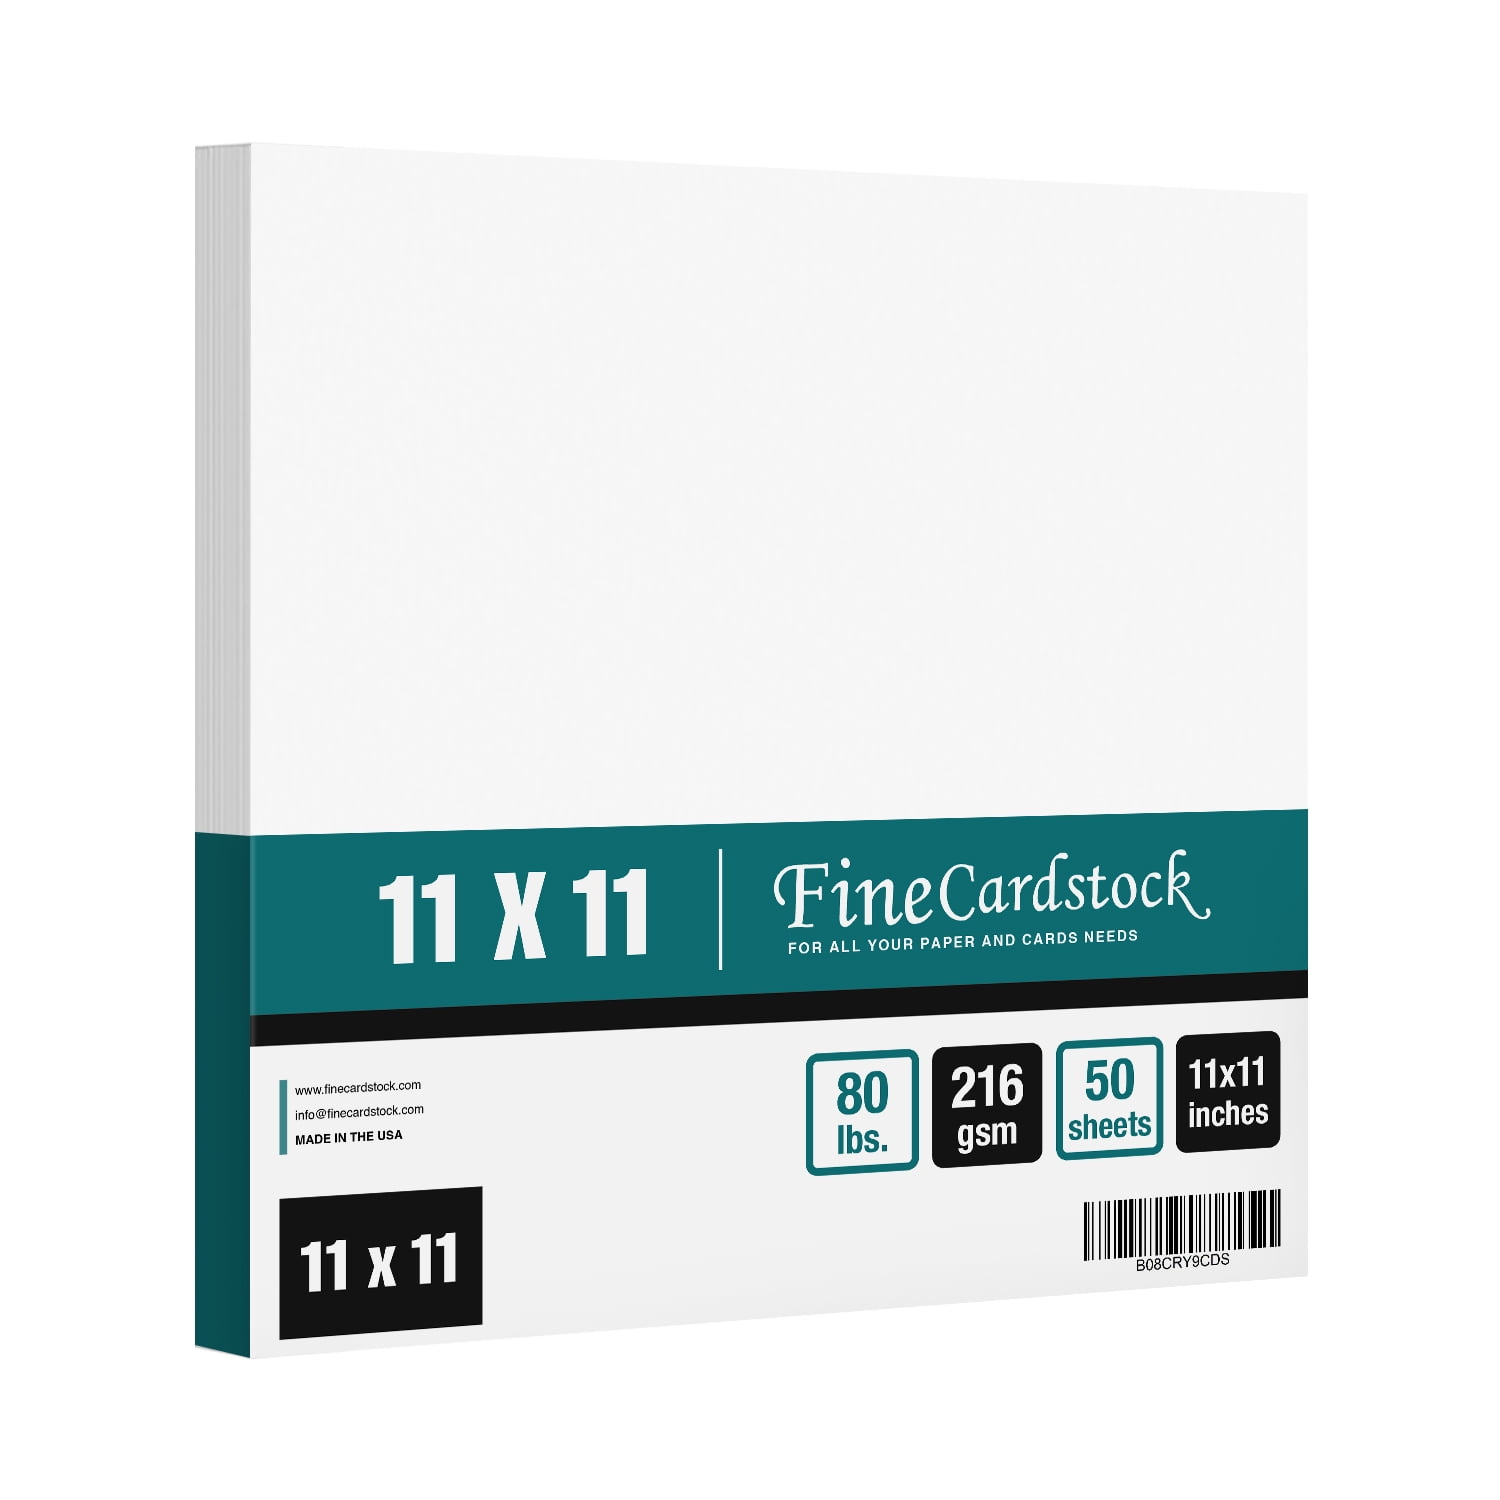 Cardstock Freshies Guide - Fine Cardstock